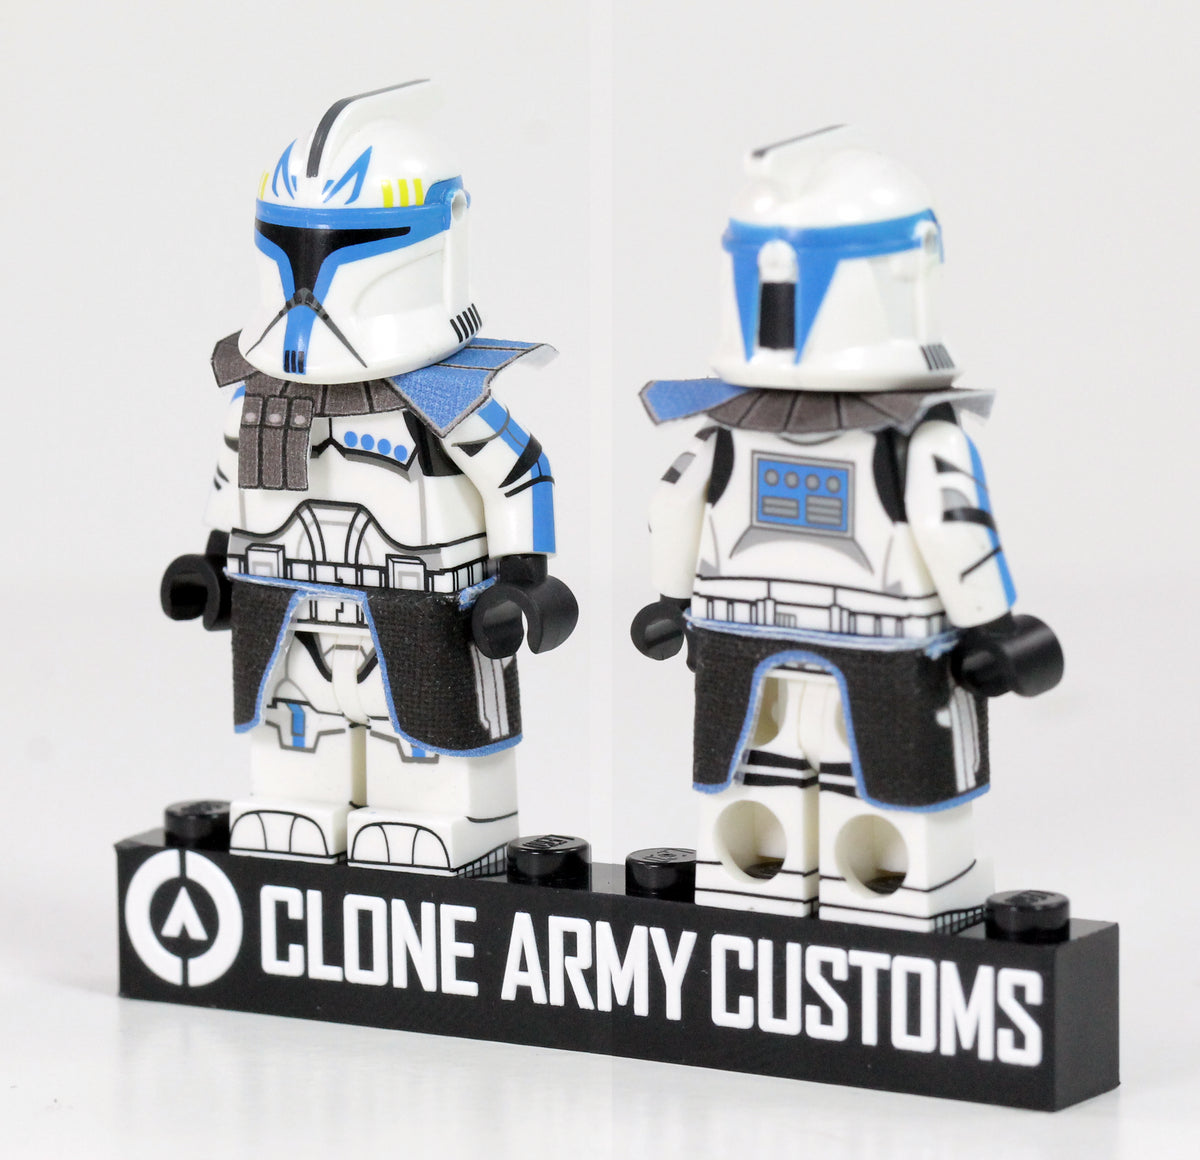 Minifig Customs - Custom Lego Star Wars Minifigures